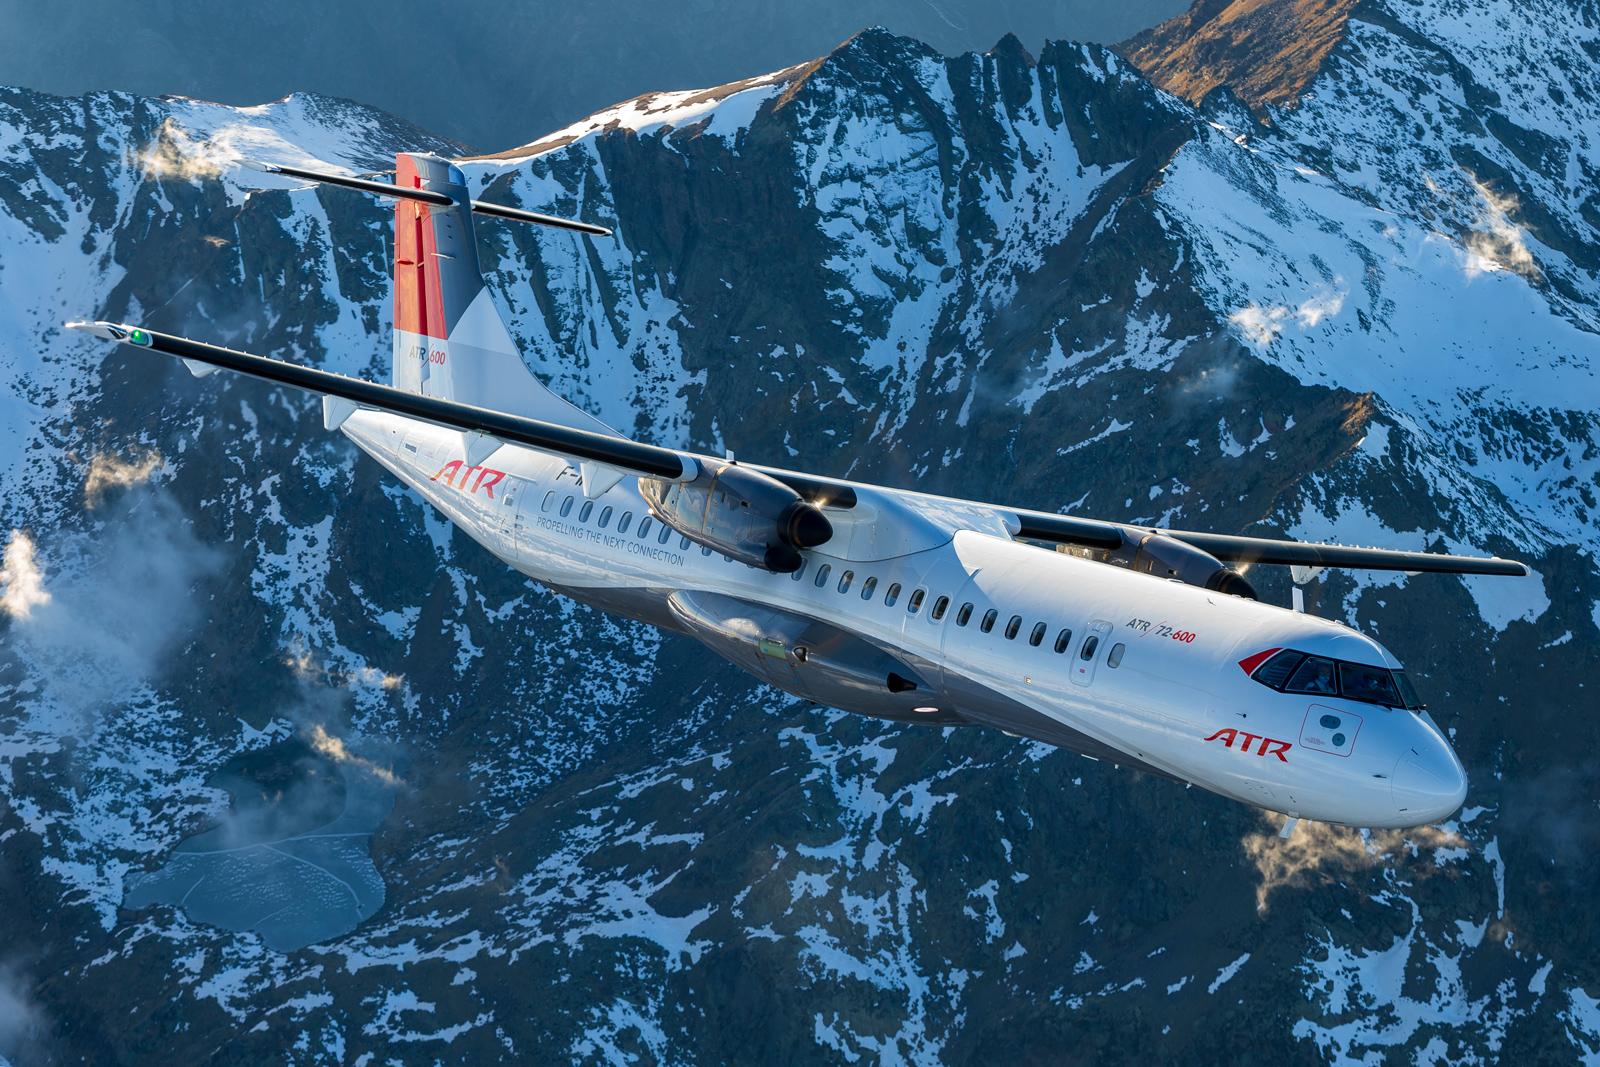 ATR 72-600 over mountains